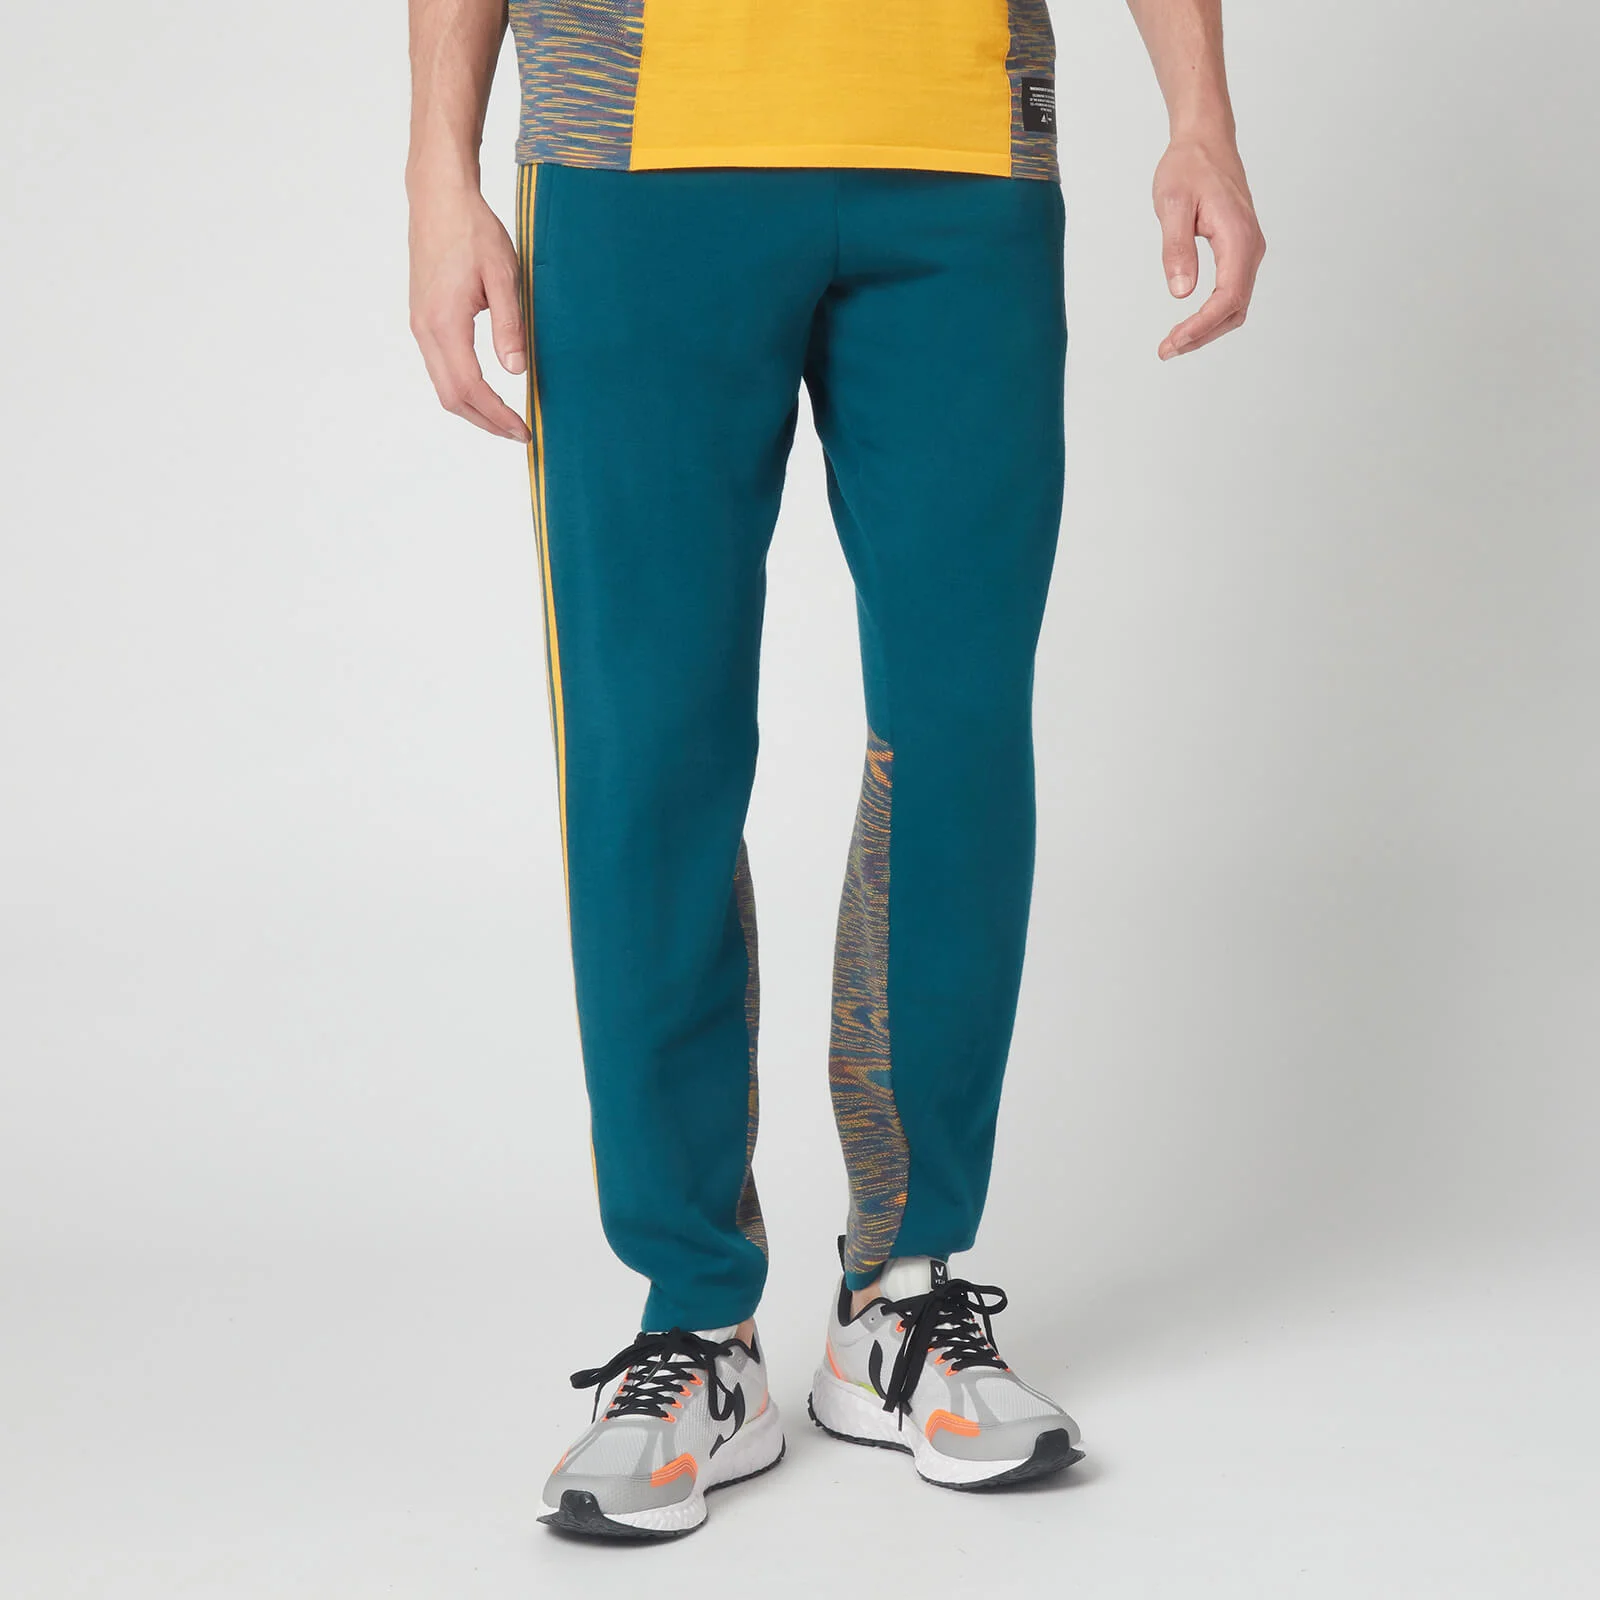 adidas X Missoni Men's Astro Pants - Green Image 1